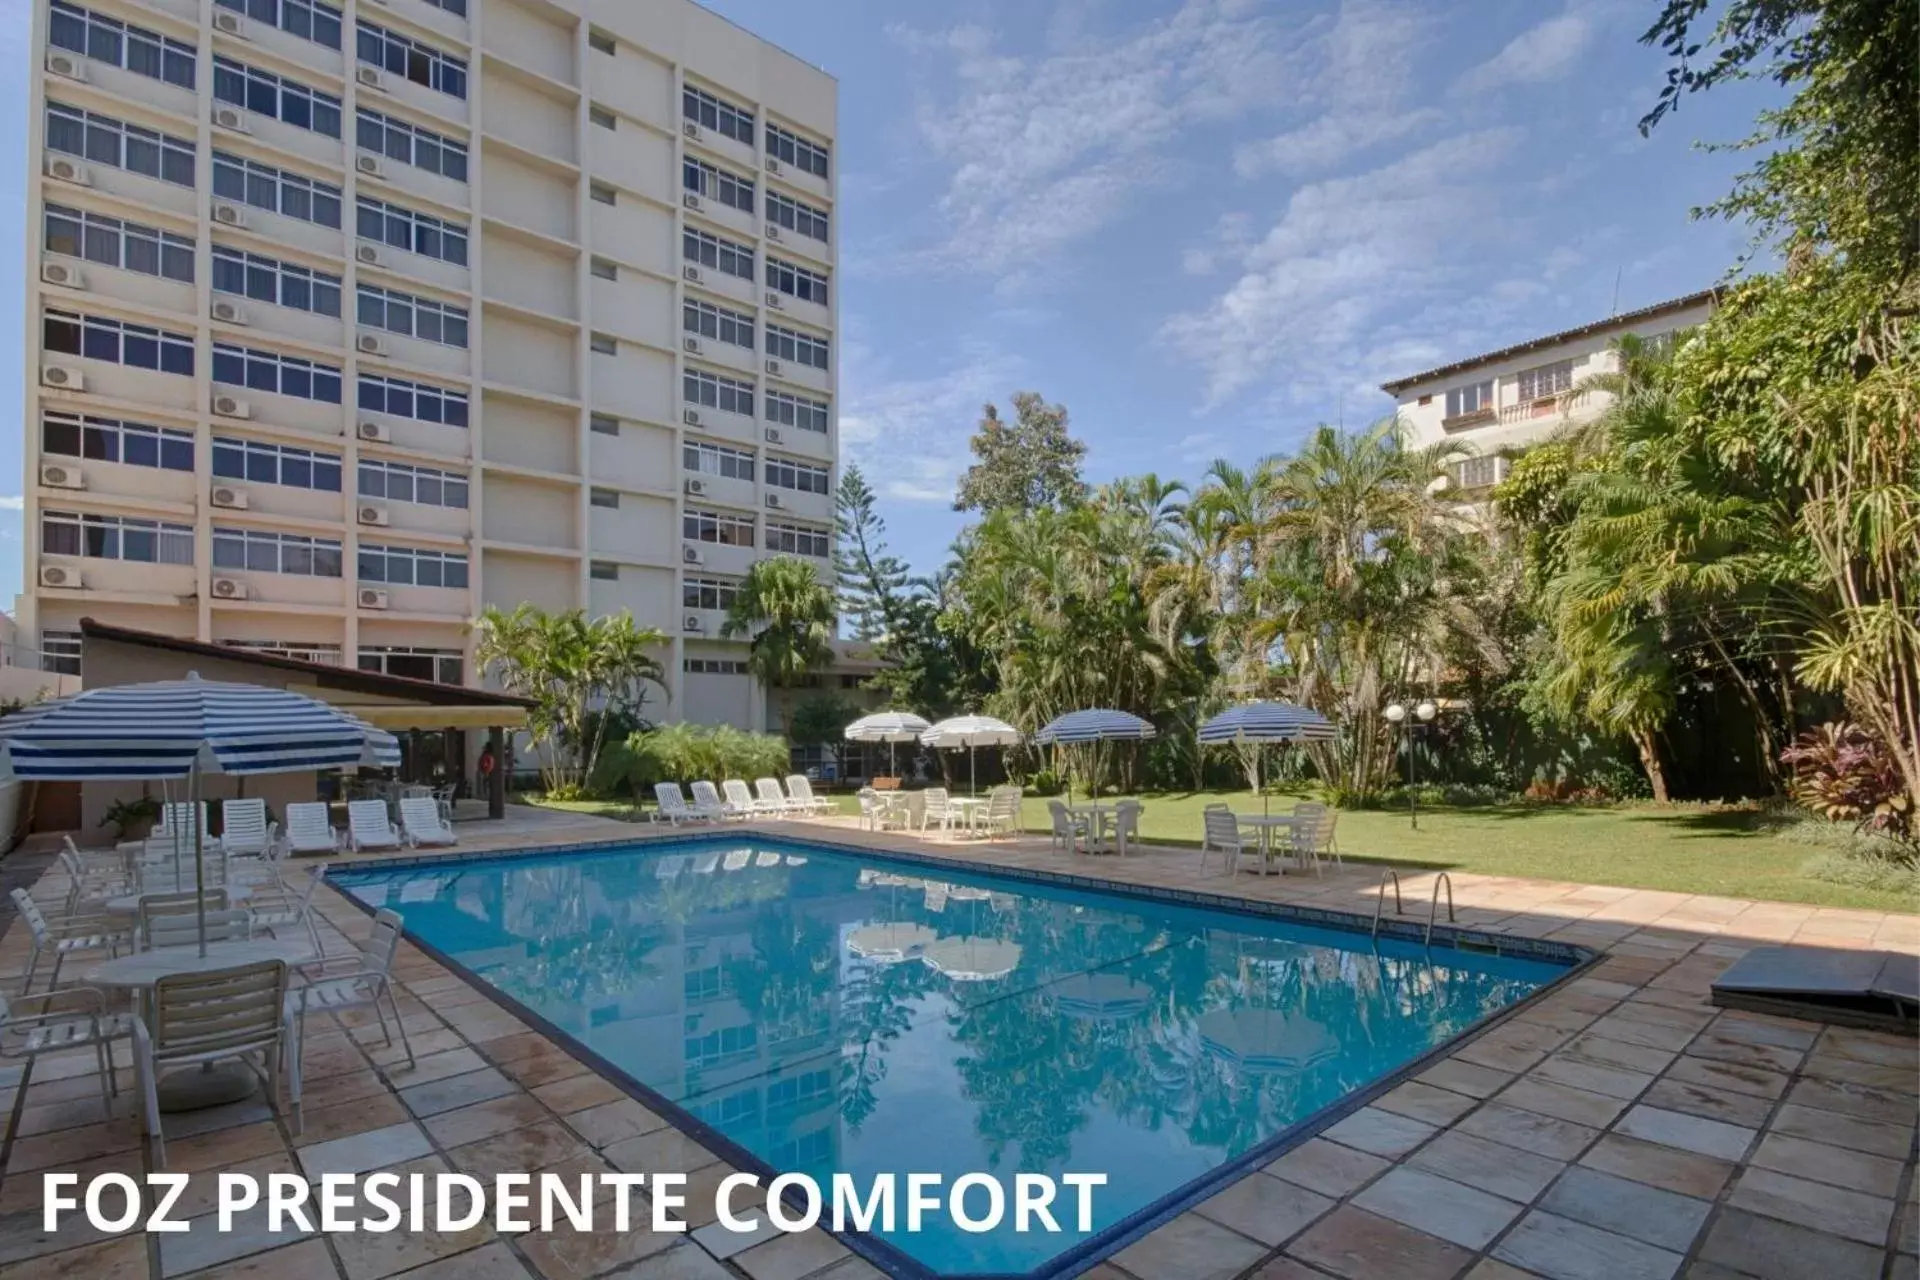 Property building, Swimming Pool in Foz Presidente Comfort Hotel